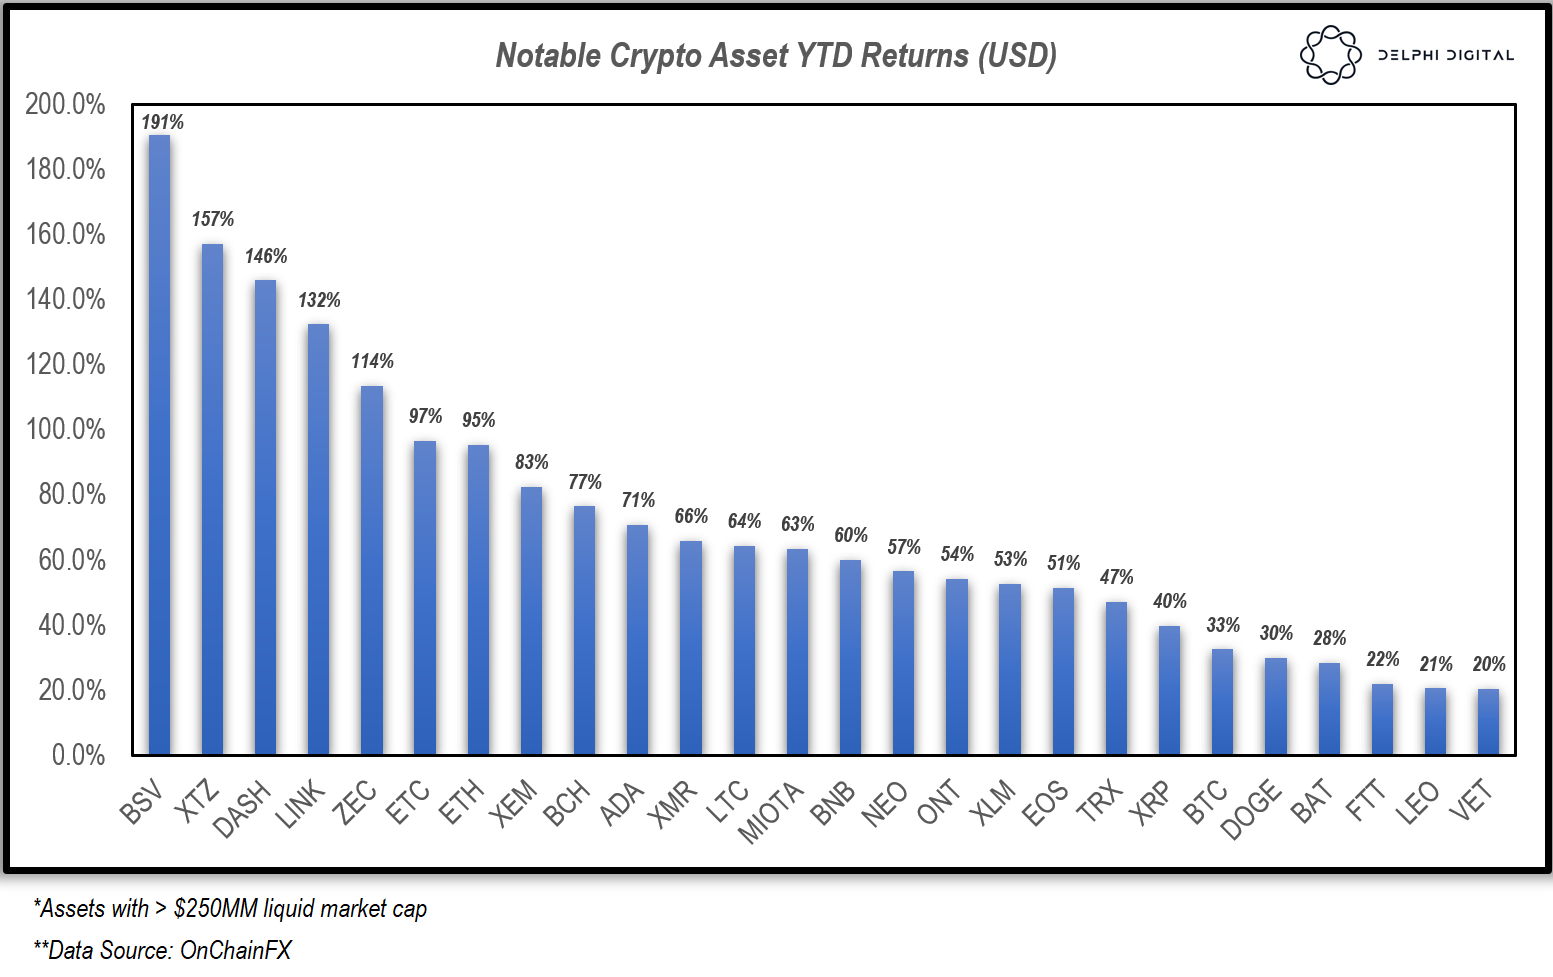 Notable Crypto Asset YTD Returns (USD). Source: Delphi Digital